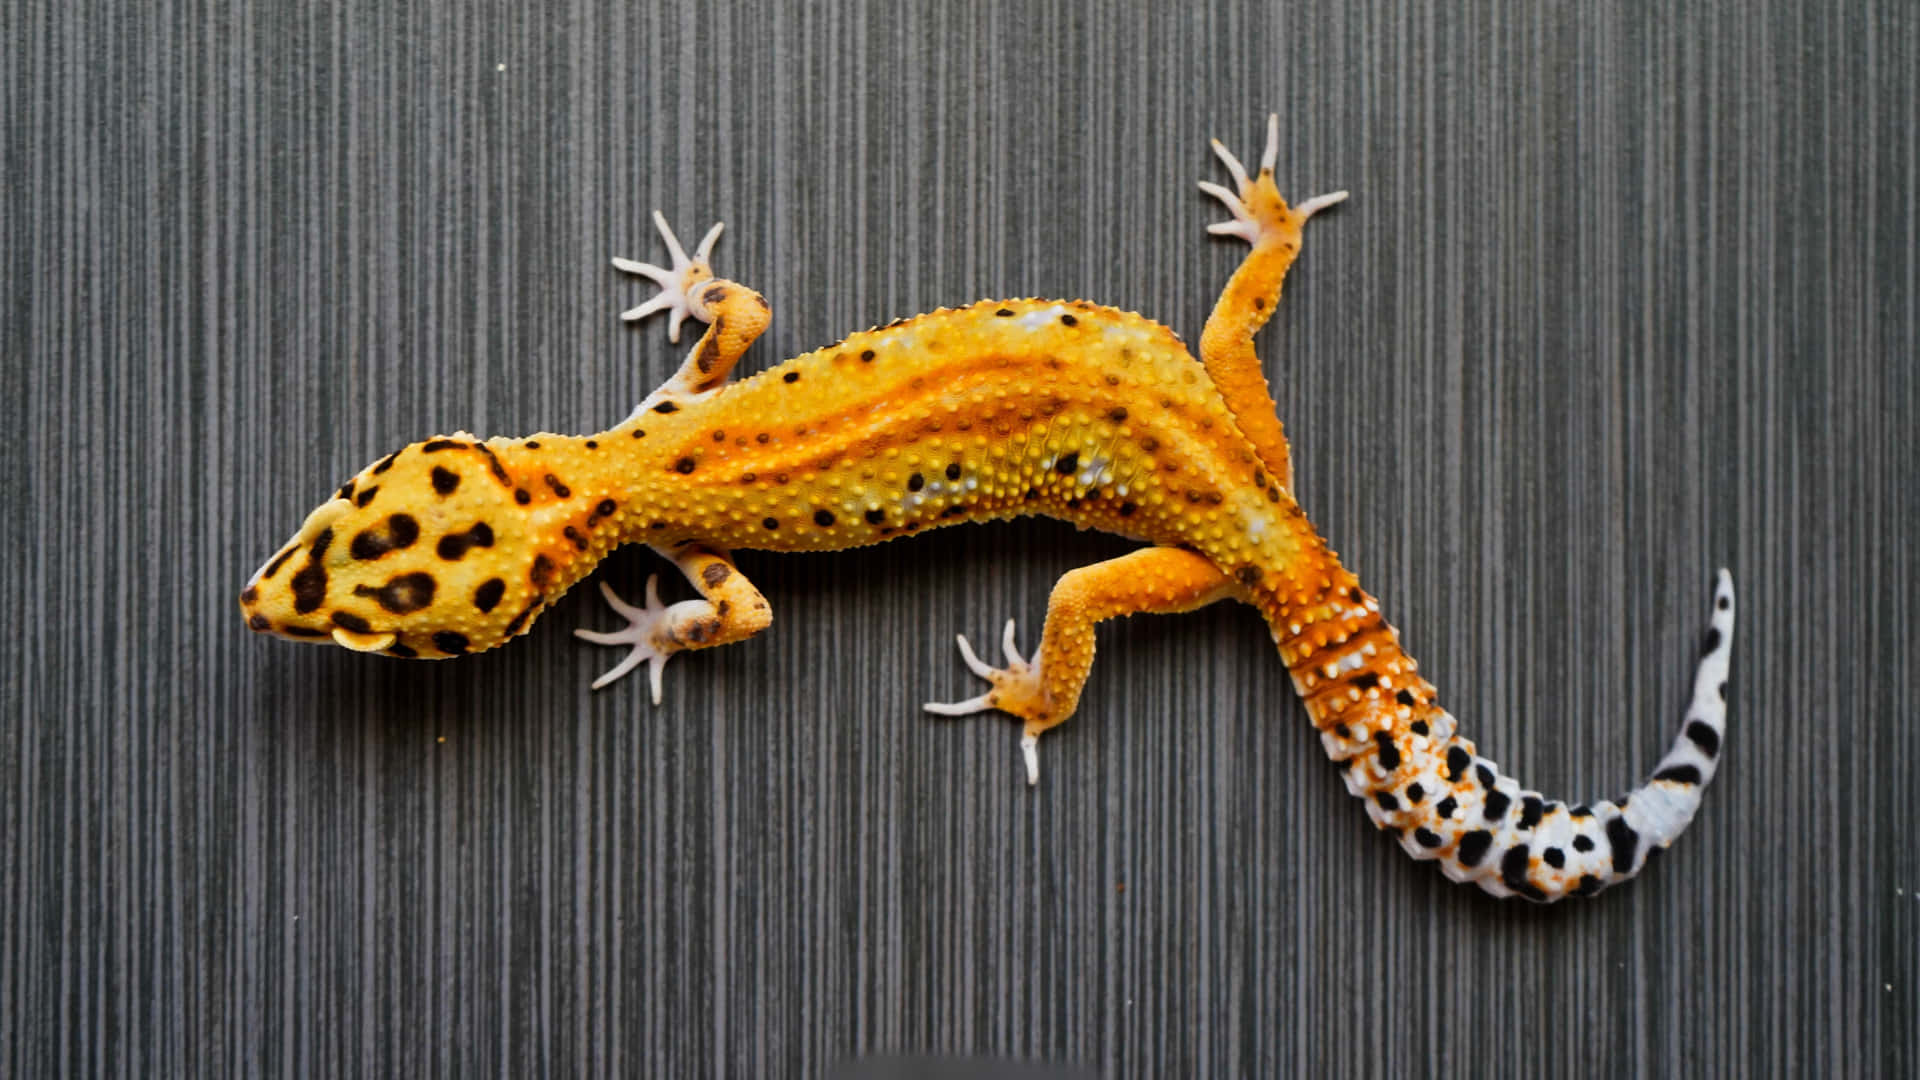 A Close-up of a Gecko